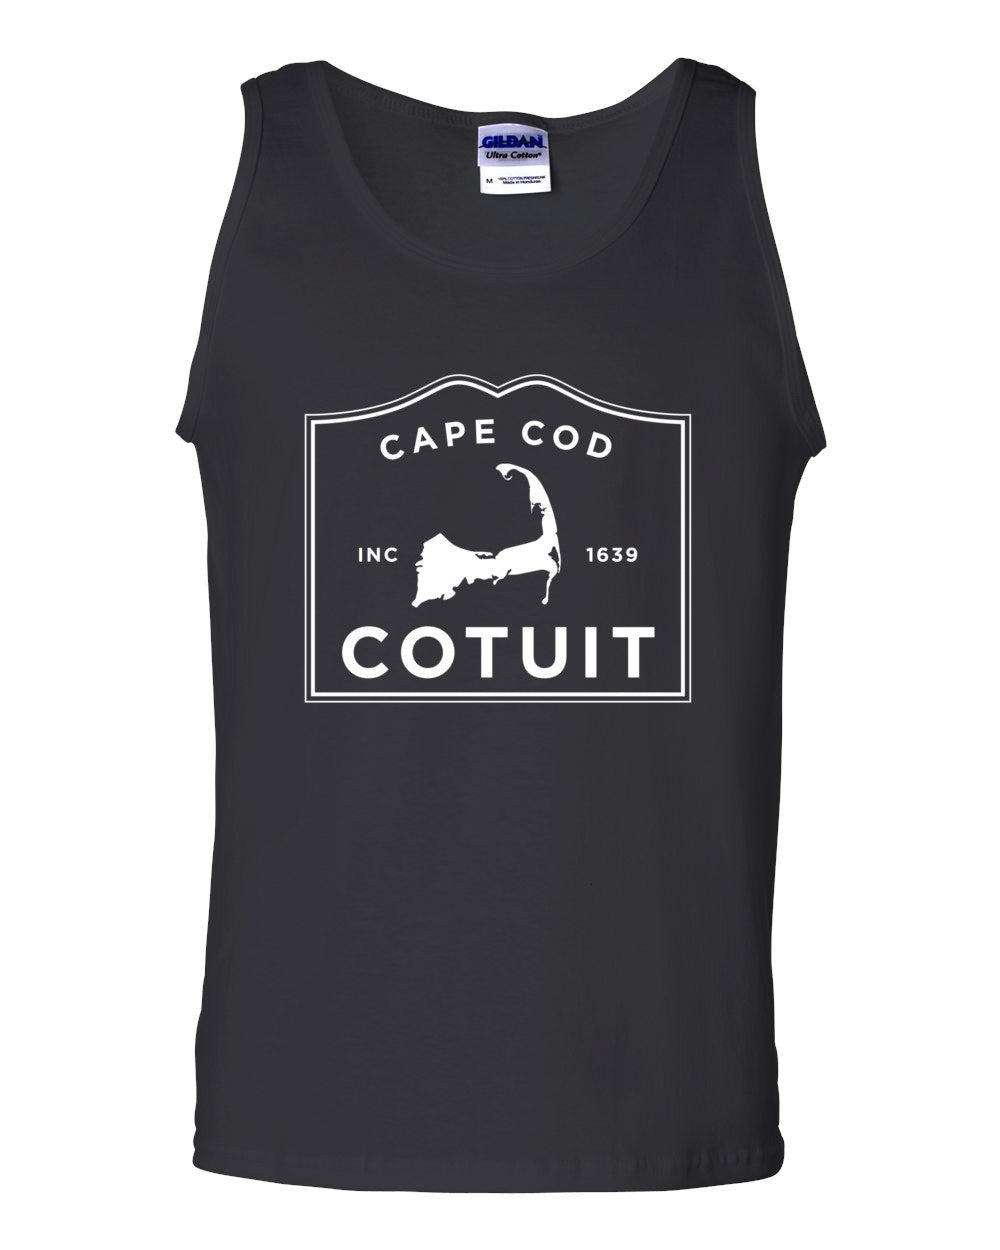 Cotuit Cape Cod Tank Top